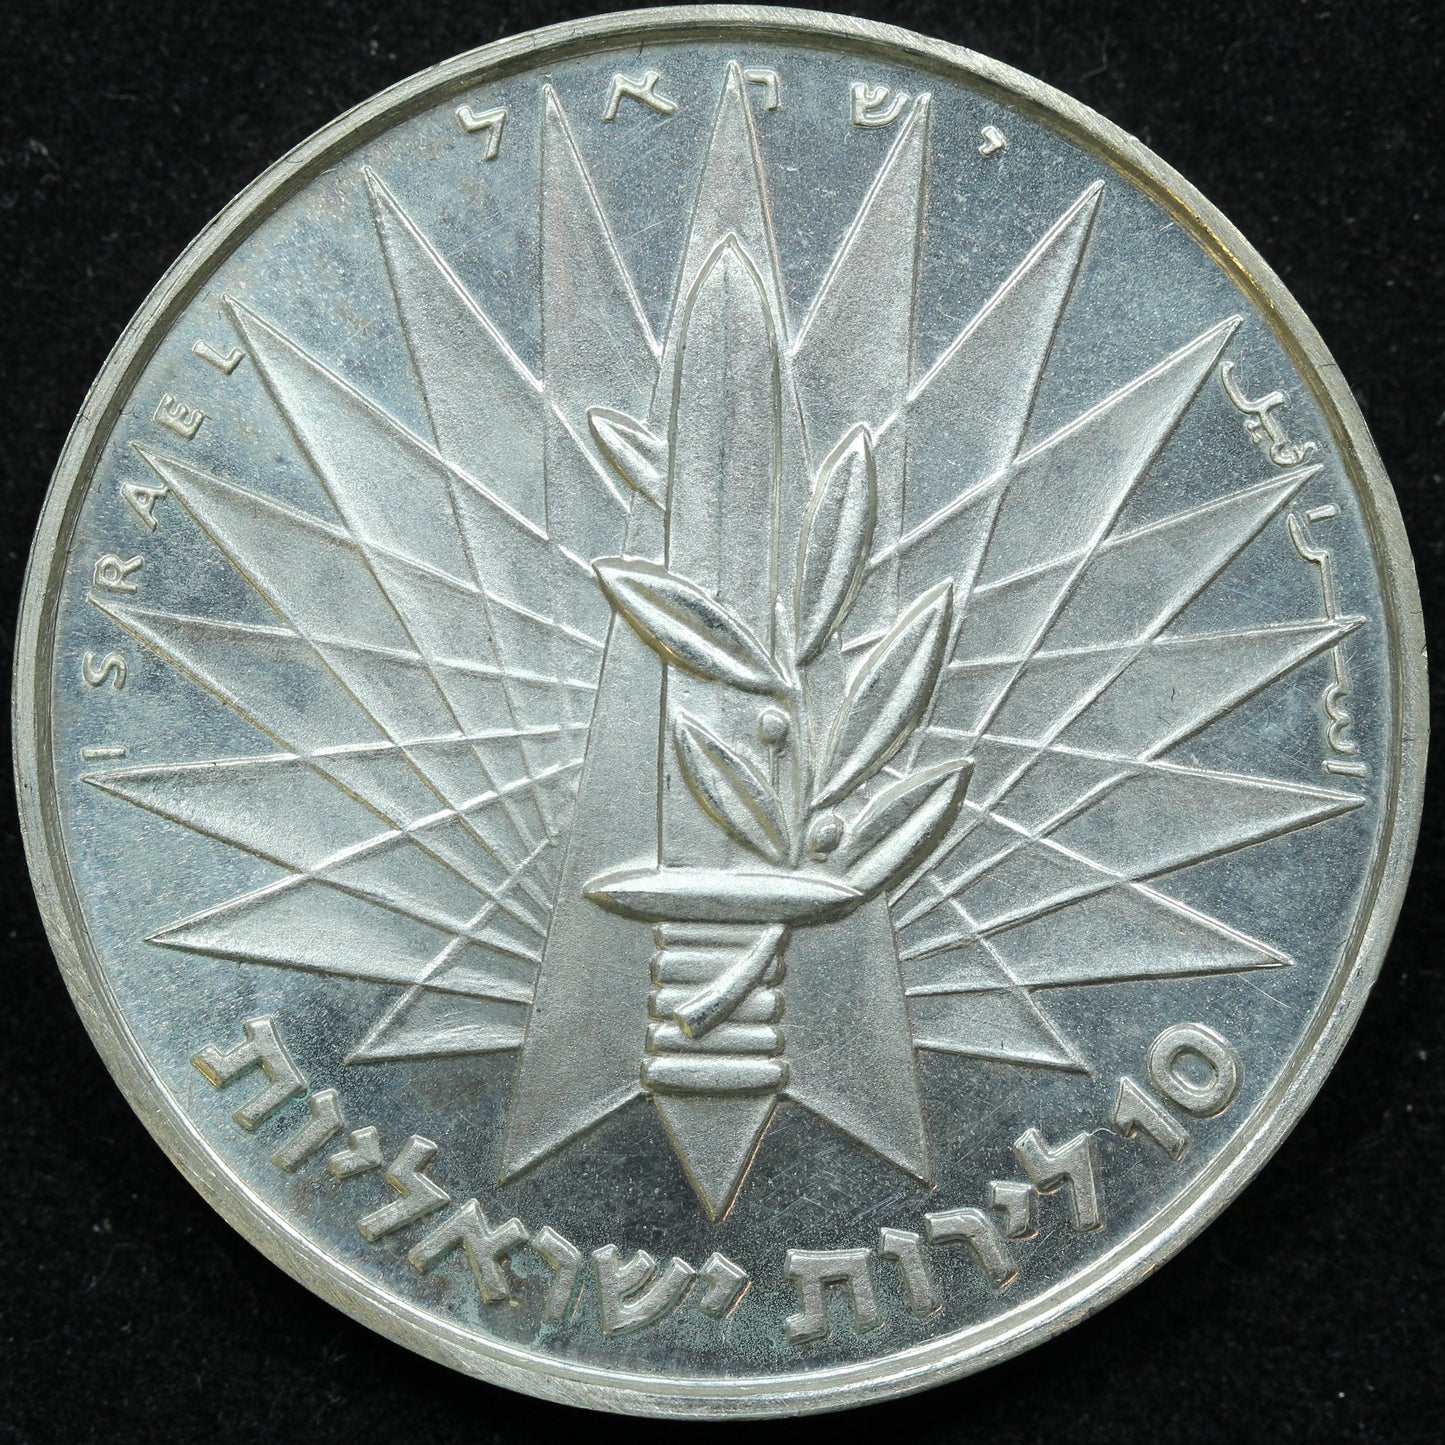 1967 Israel War for Peace Silver .935 Medal 26gr 37 mm